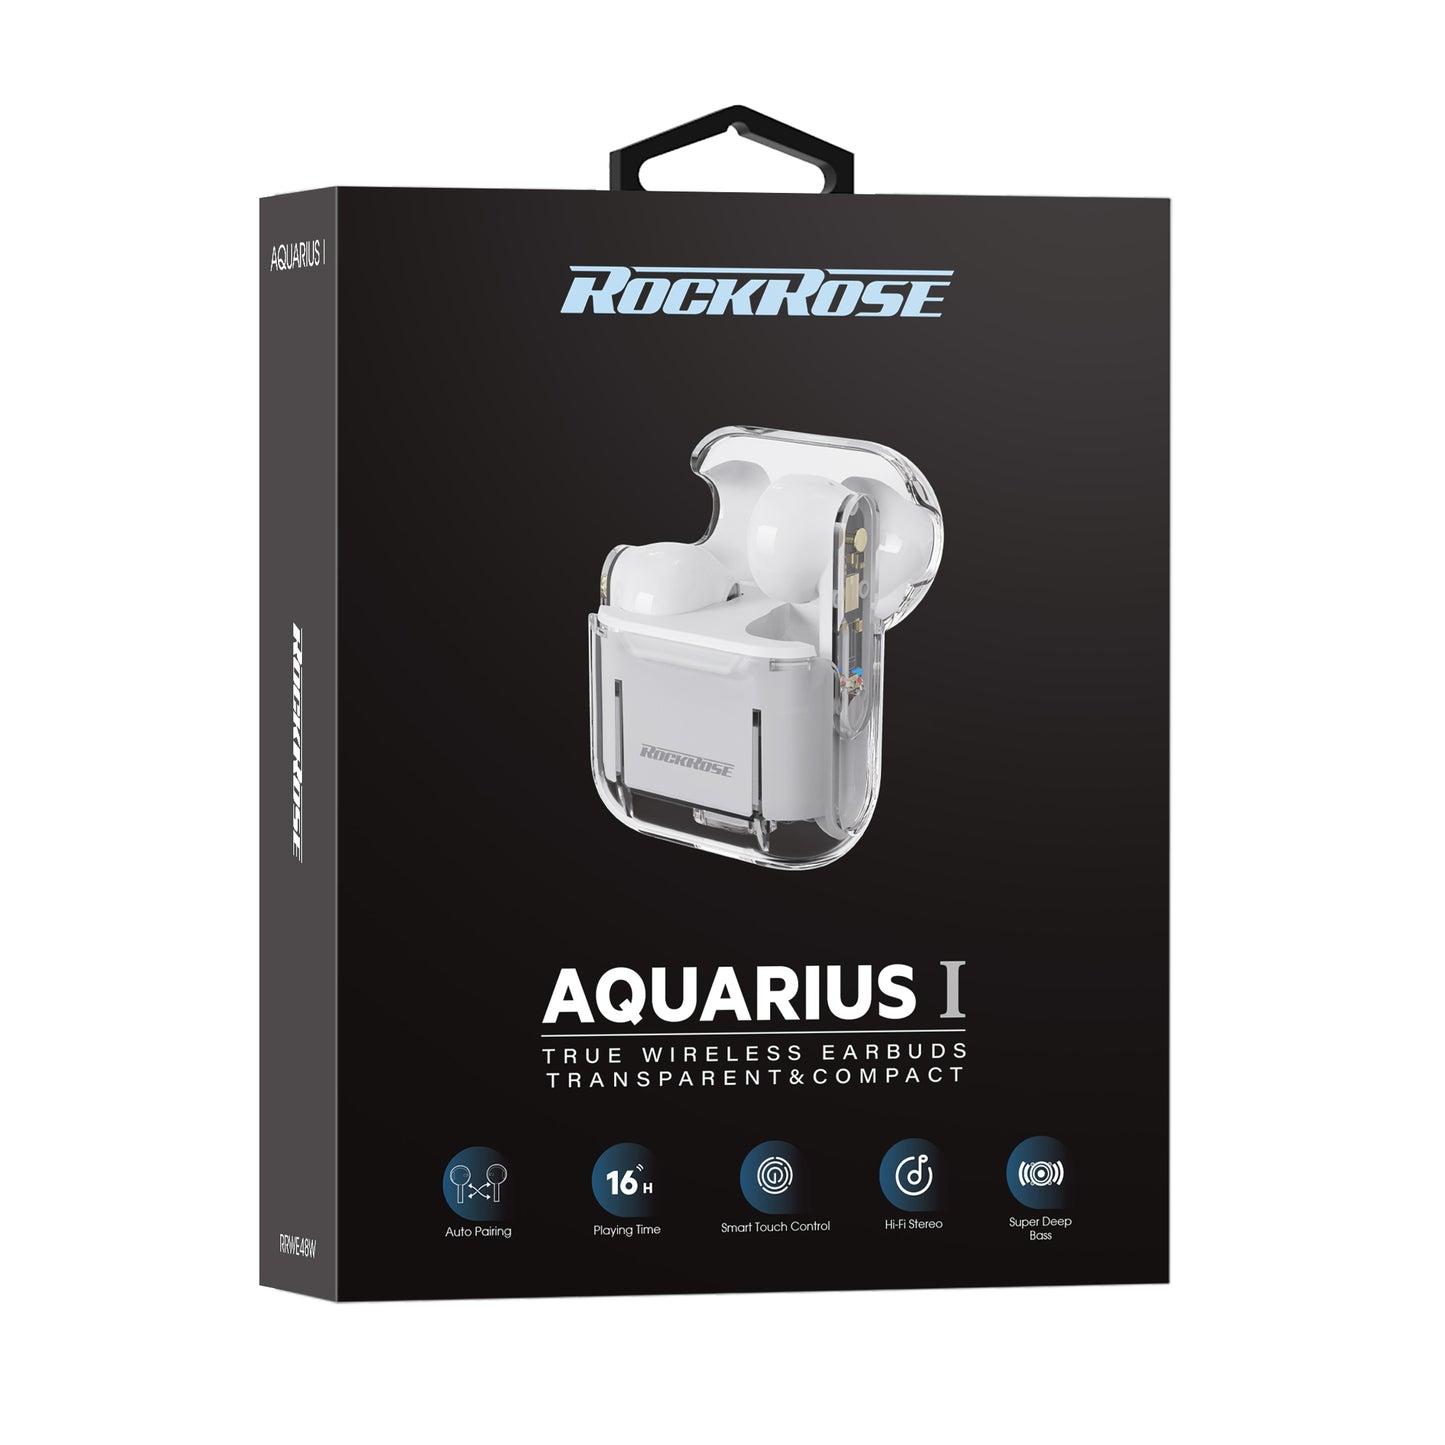 RockRose Aquarius I True Wireless Earbuds